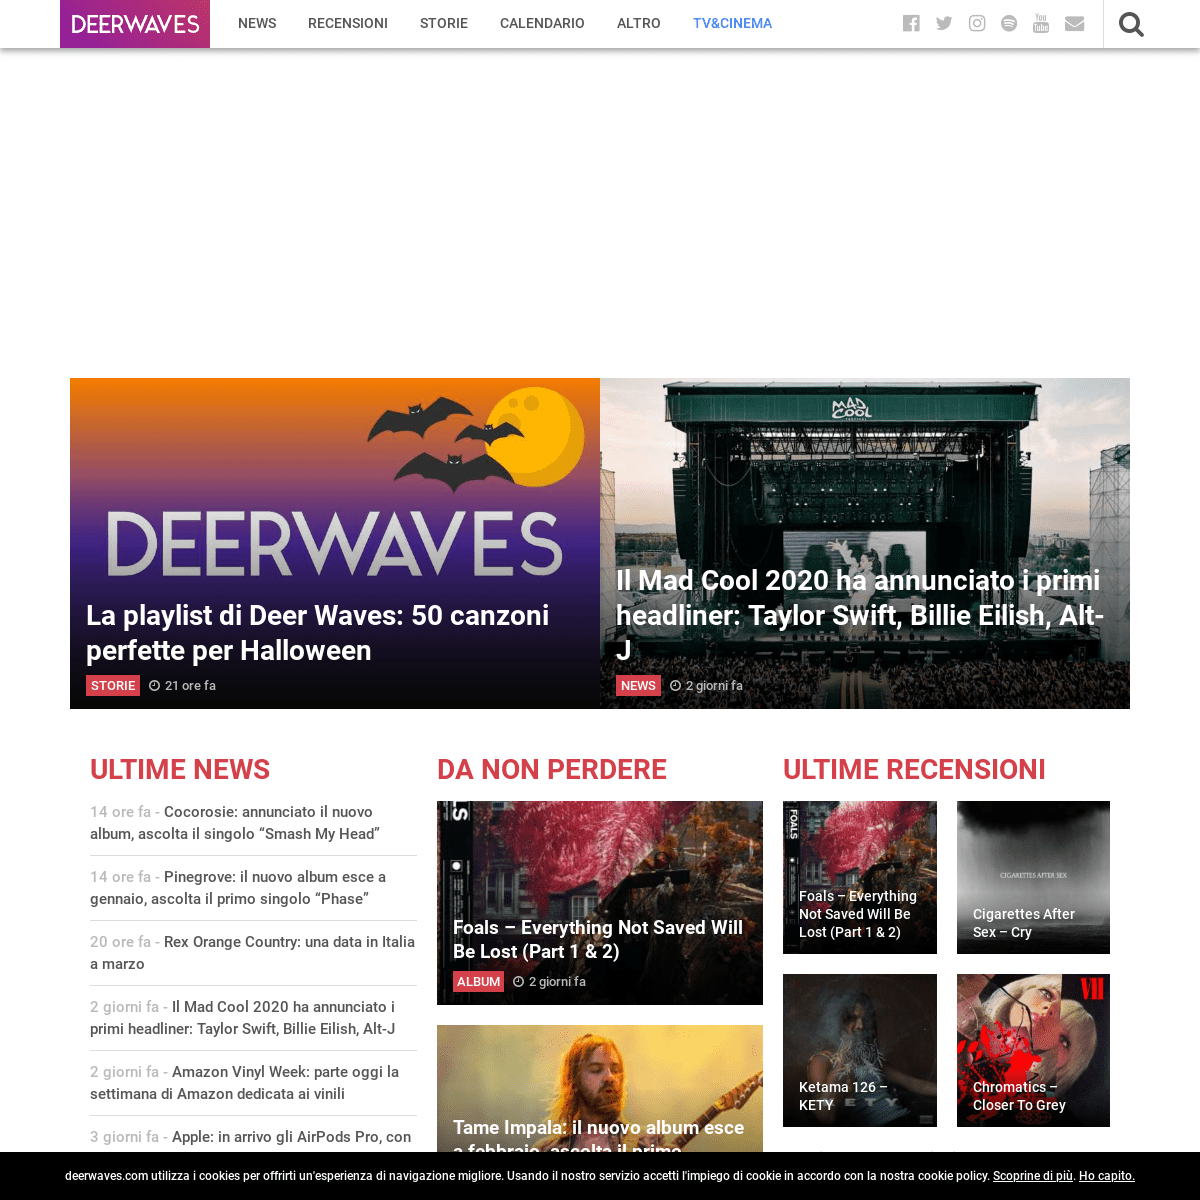 A complete backup of deerwaves.com